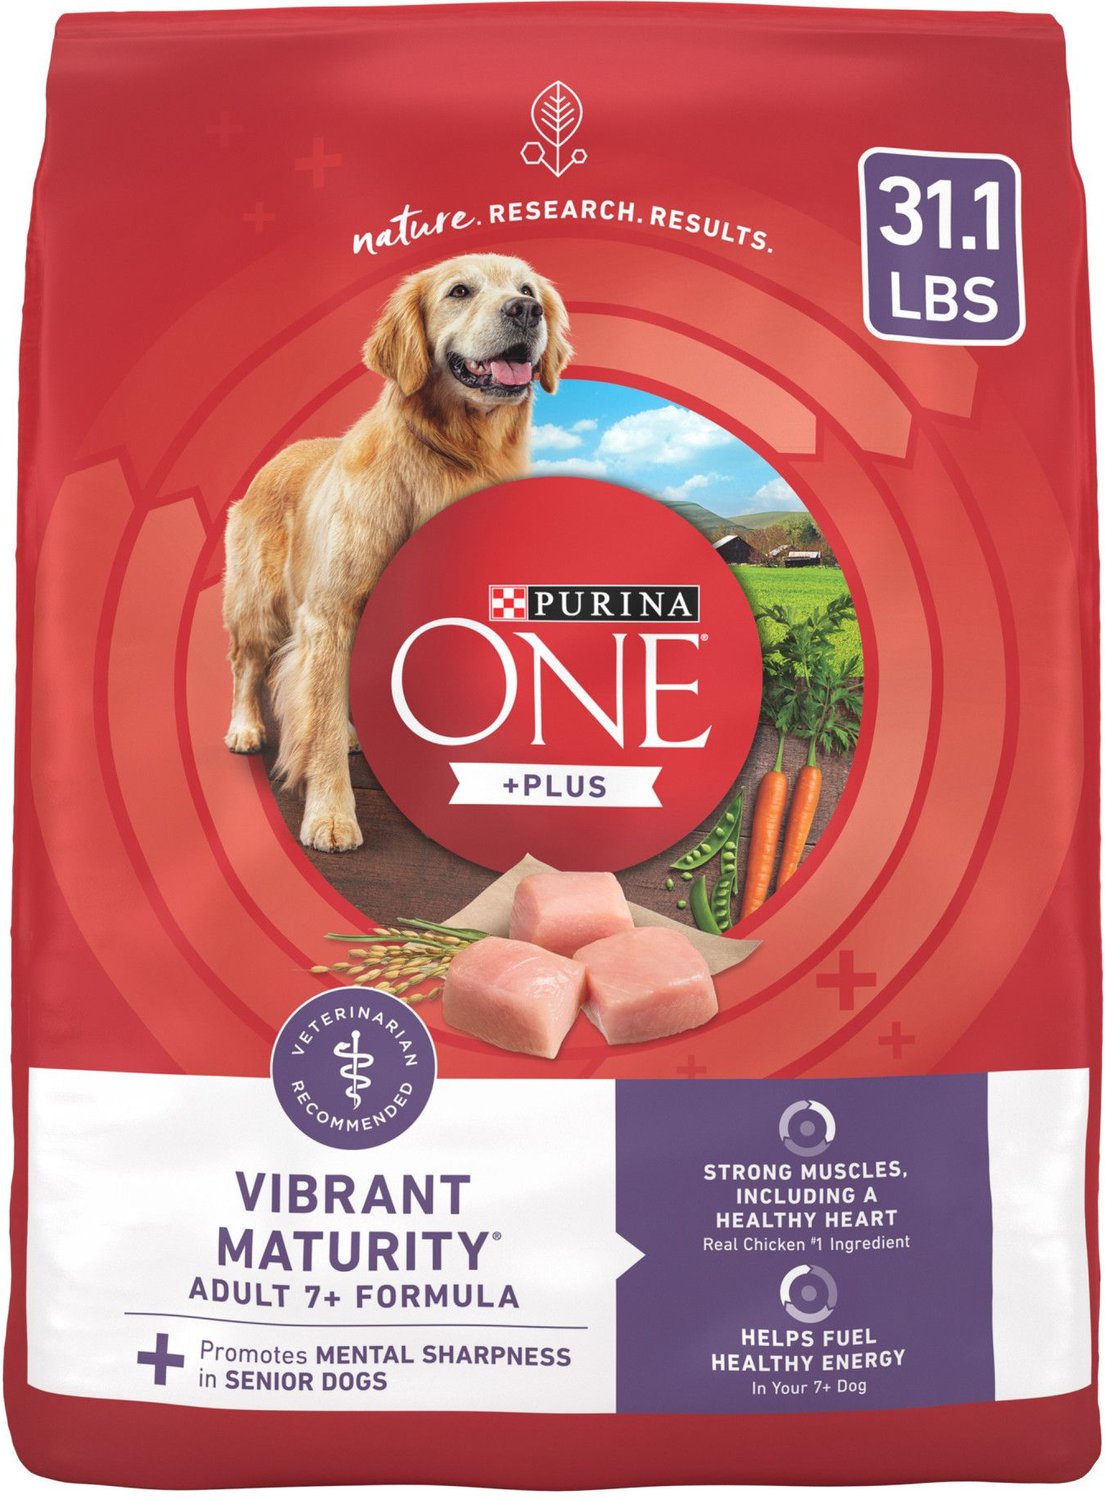 Purina One SmartBlend Vibrant Maturity 7+ Adult Formula Dry Dog Food